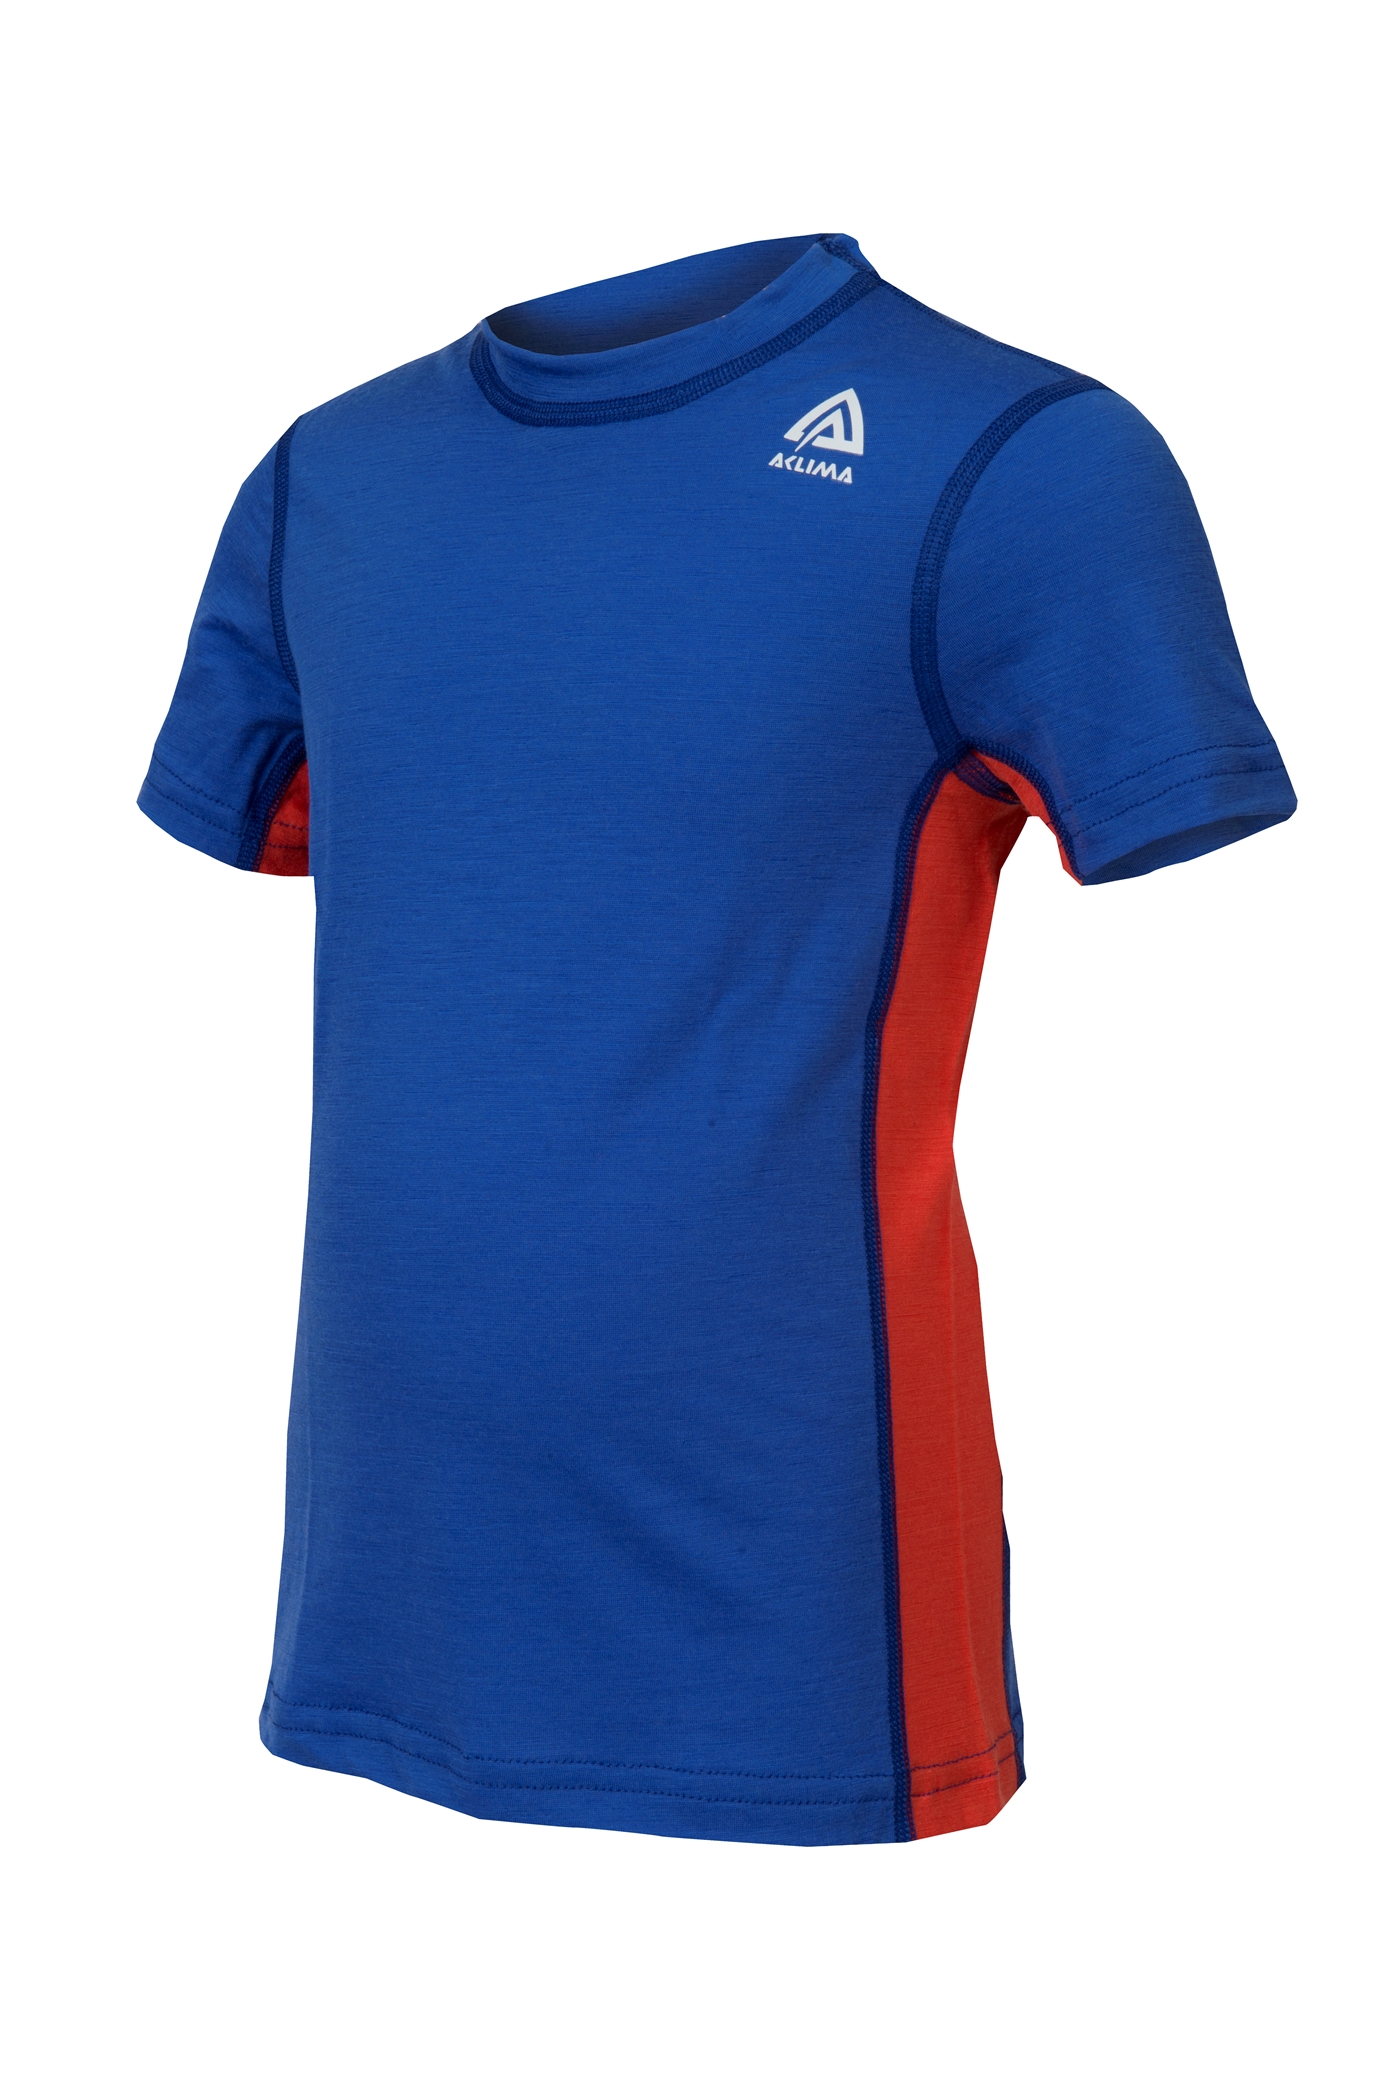 aclima lightwool t-shirt junior - dazzling blue/poinciana